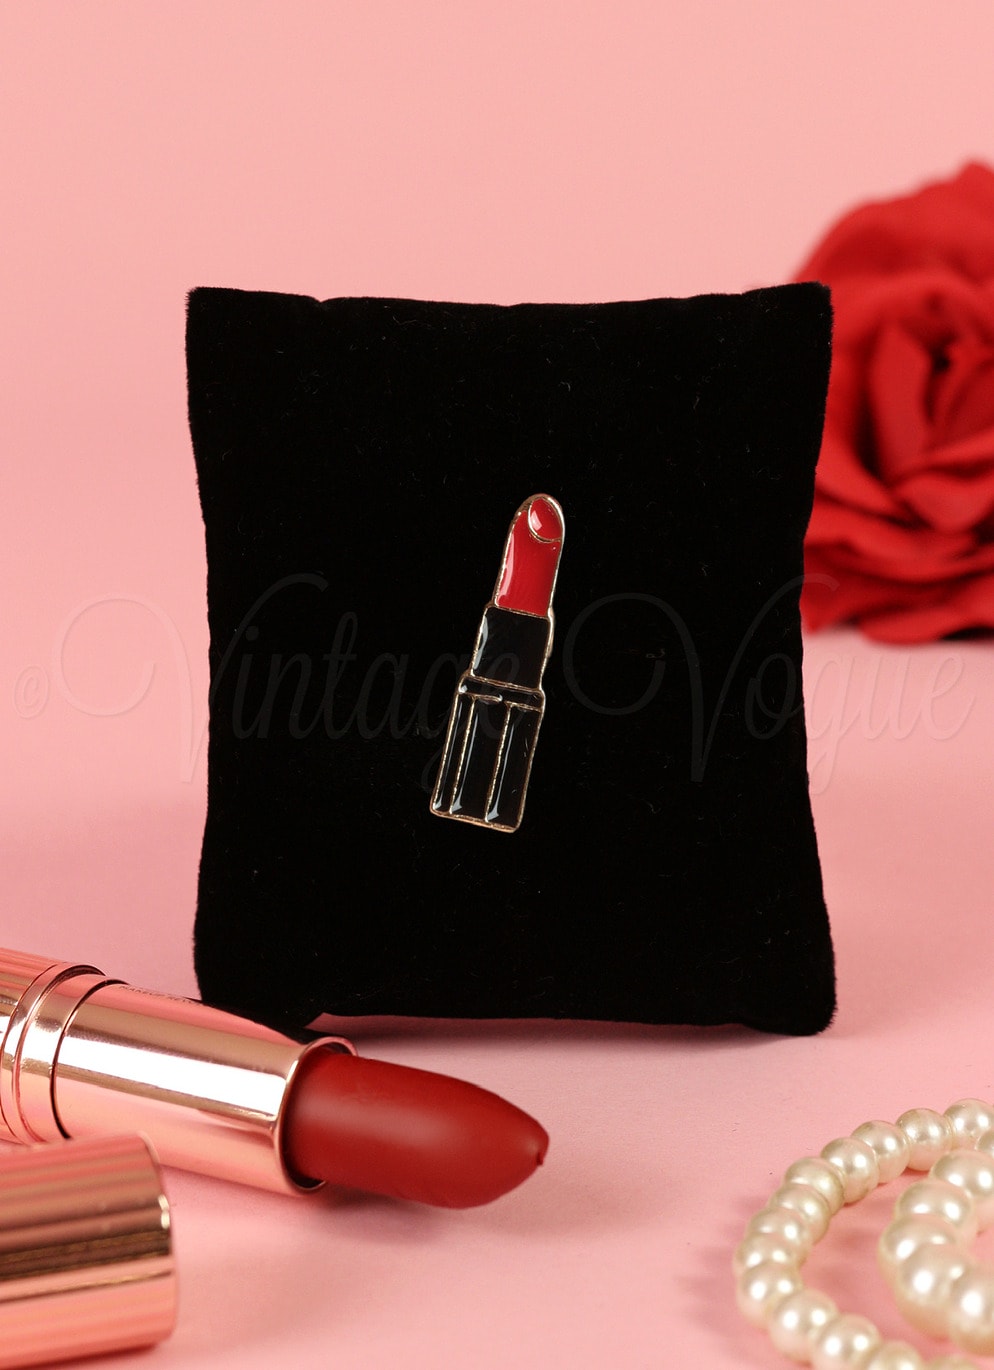 Oh so Retro! Vintage Lippenstift Pin Brosche Little Red Lipstick in Rot